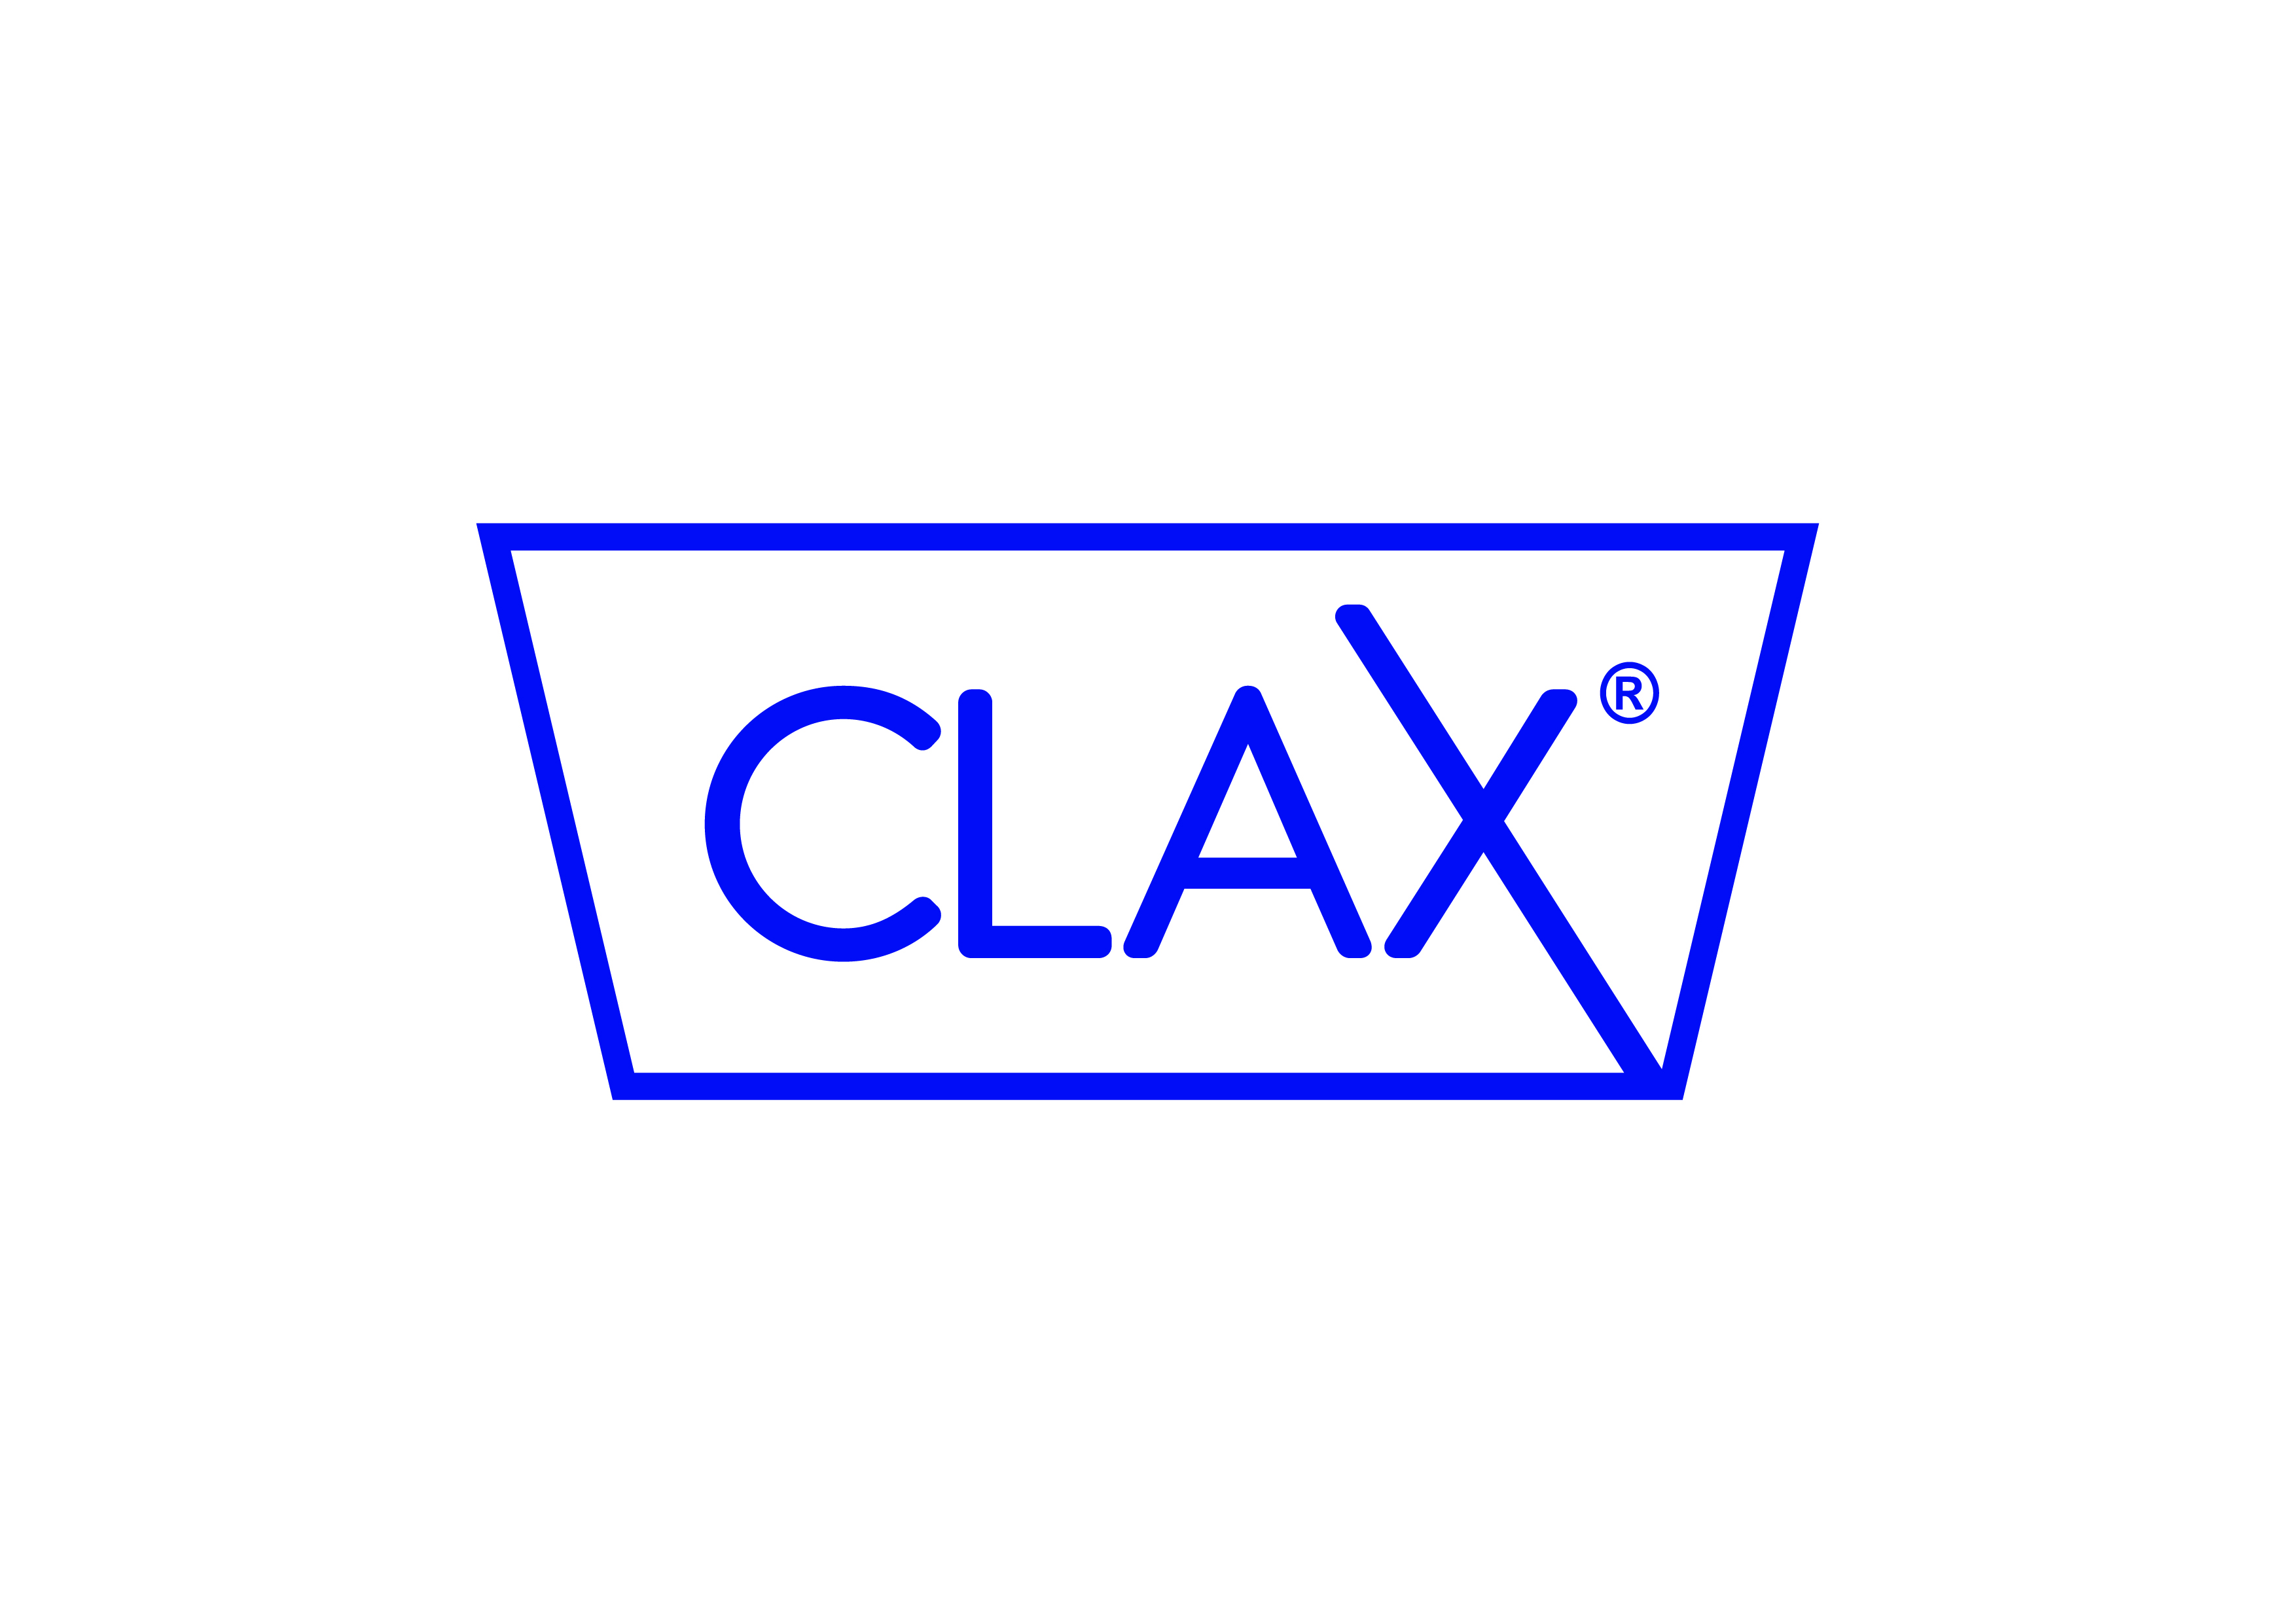 Clax